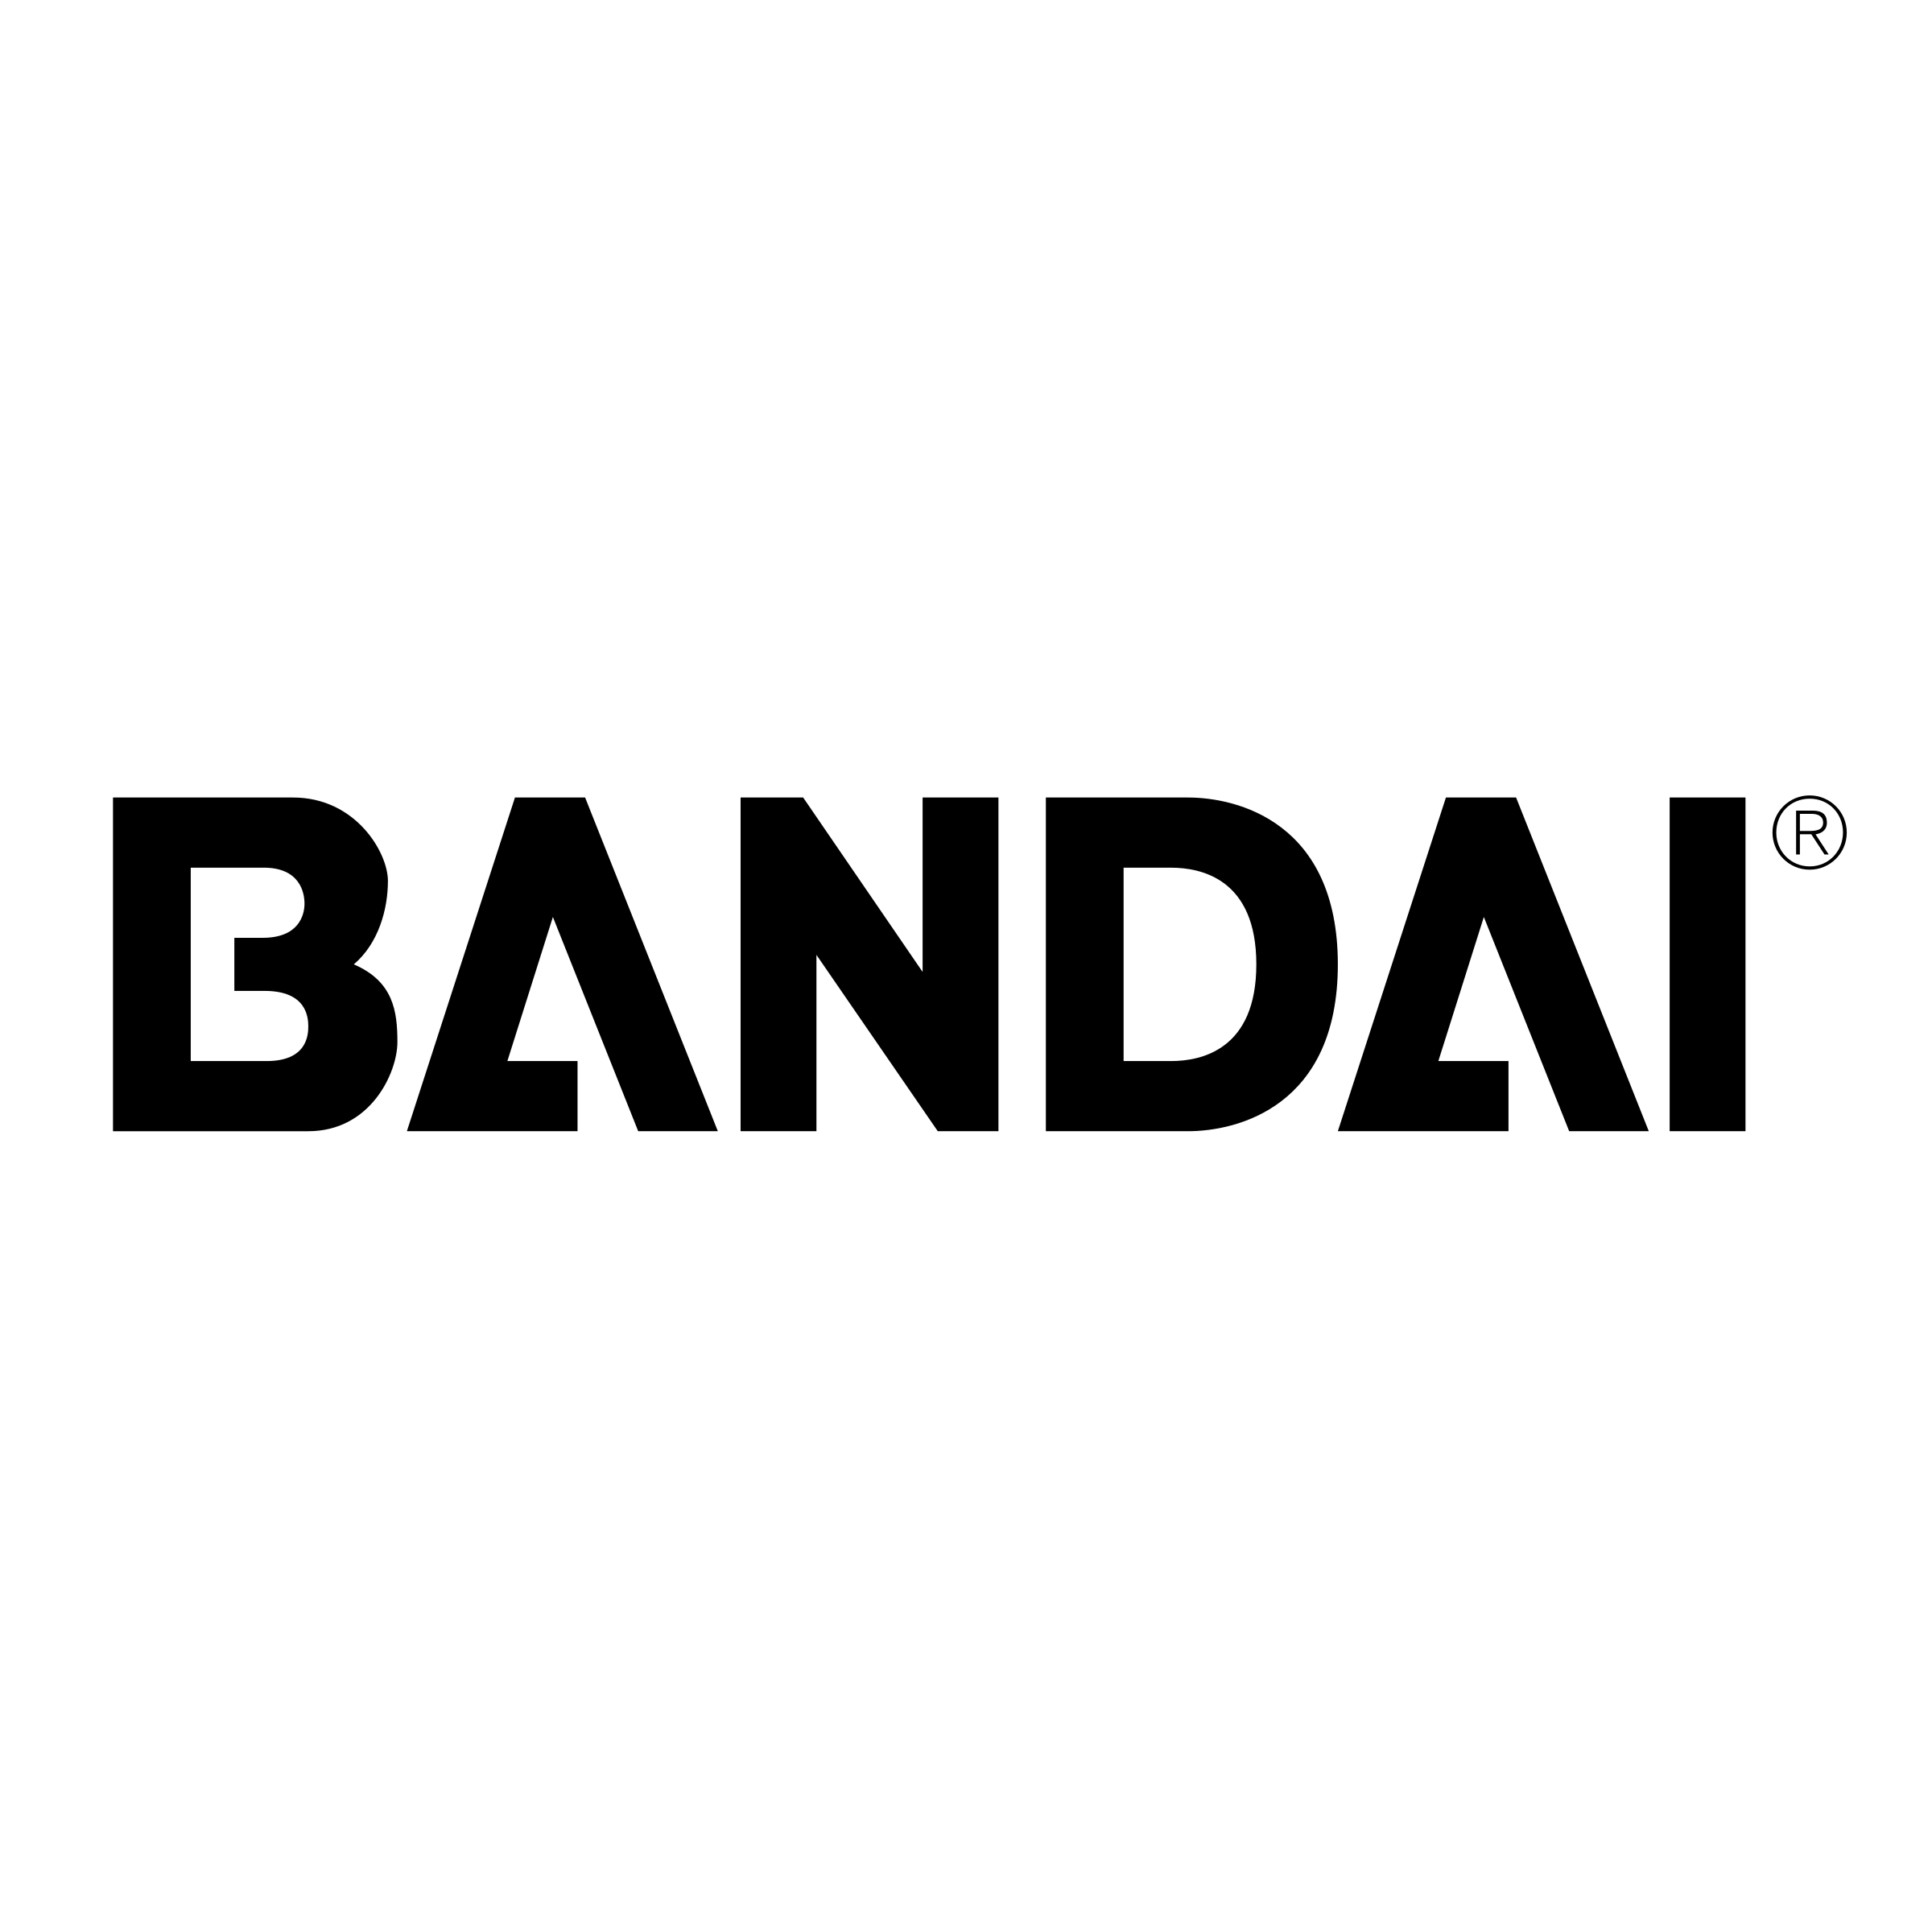 Bandai Logo - Bandai 01 Logo PNG Transparent & SVG Vector - Freebie Supply